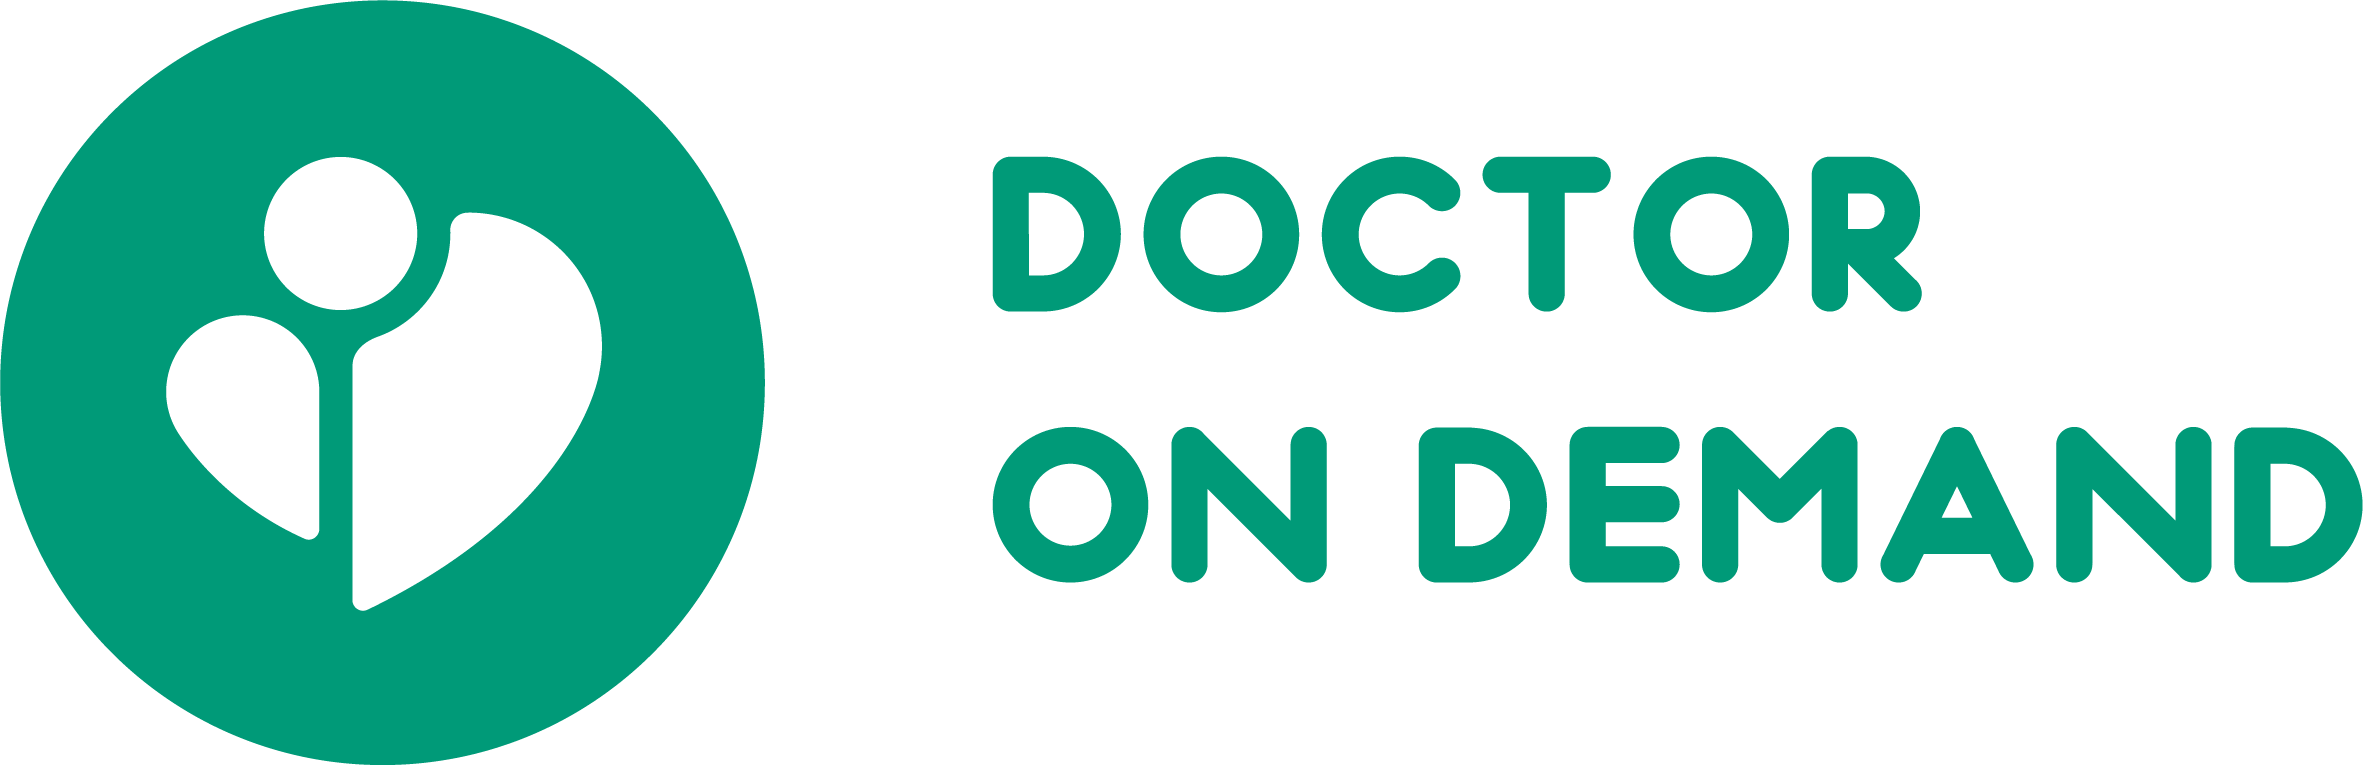 DOCTOR ON DEMAND